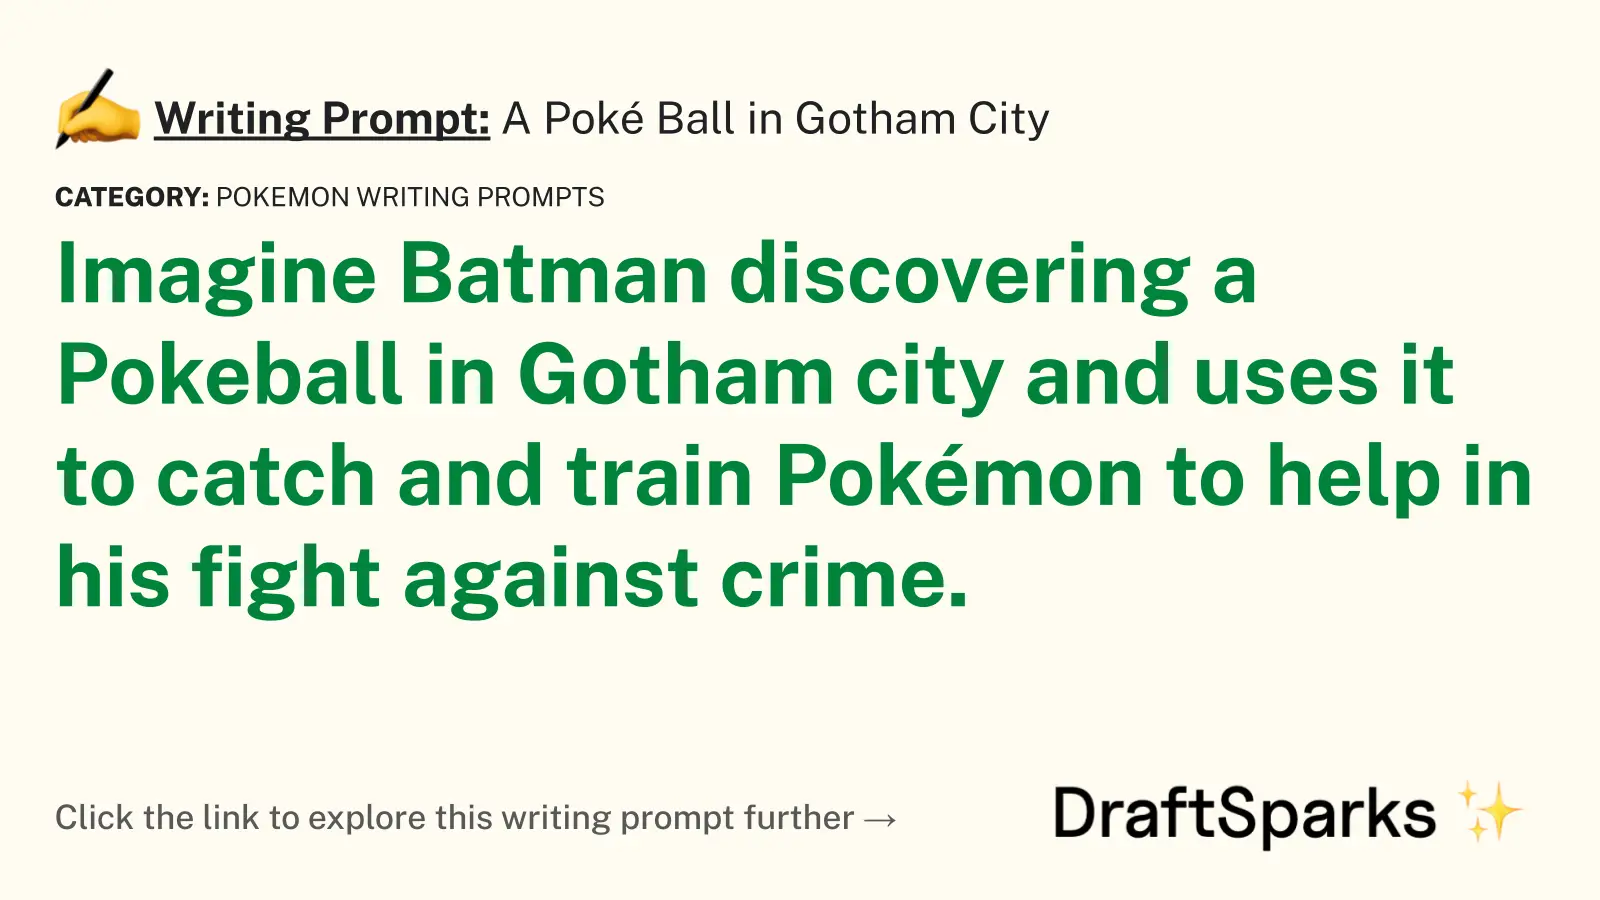 A Poké Ball in Gotham City